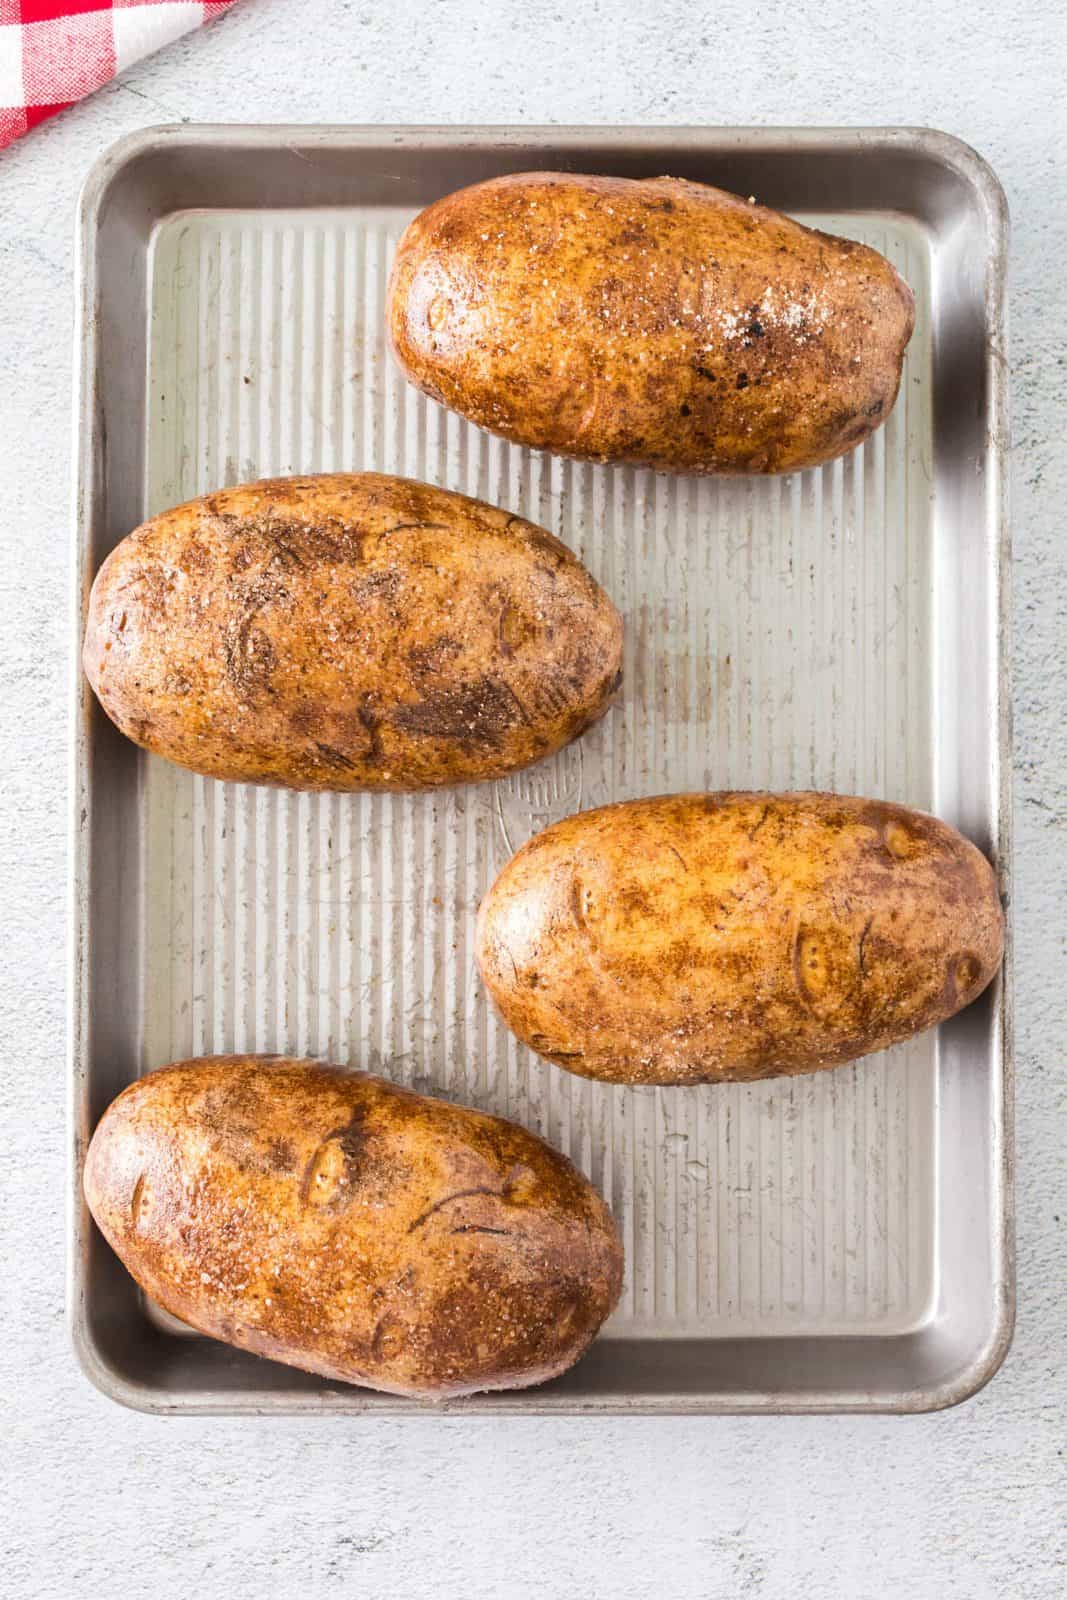 Seasoned potatoes on baking pan.